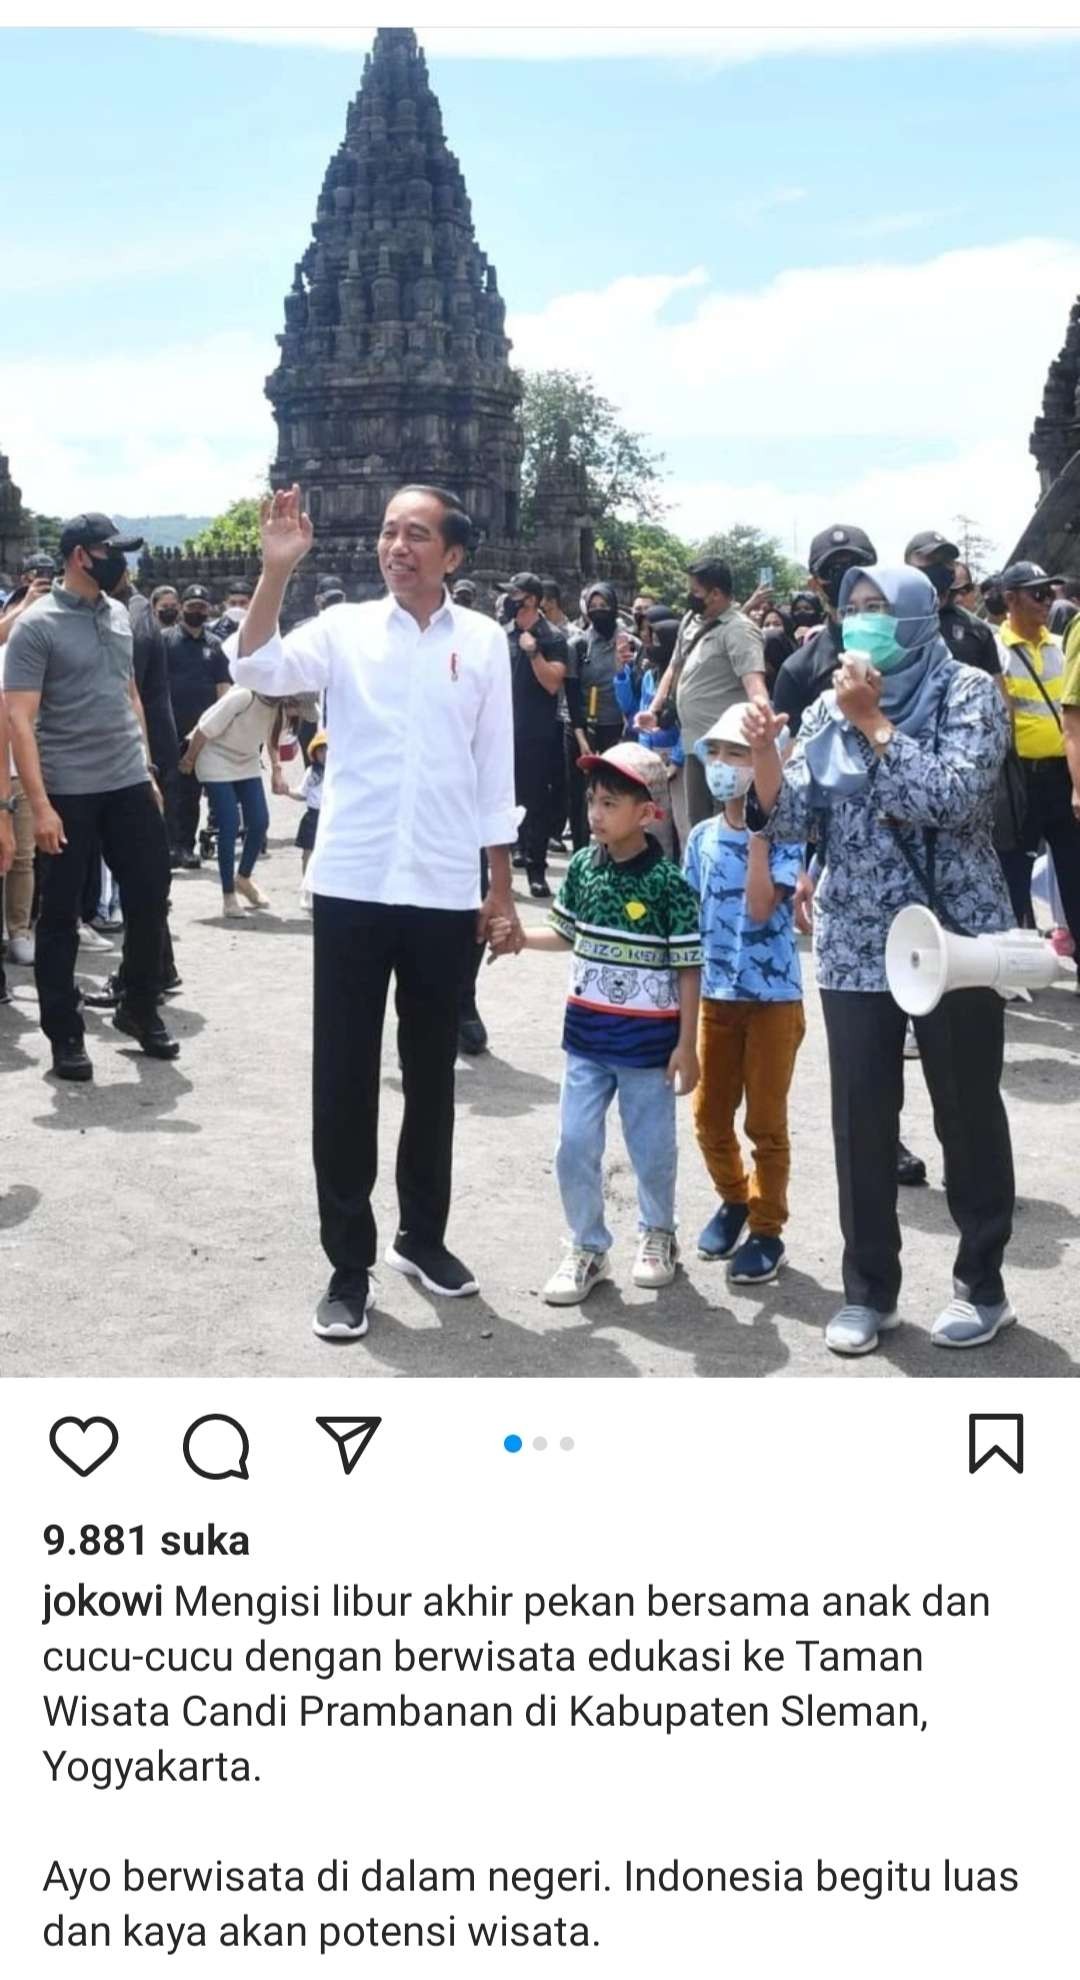 Wisata edukasi Presiden Jokowi bersama cucu di Candi Prambanan